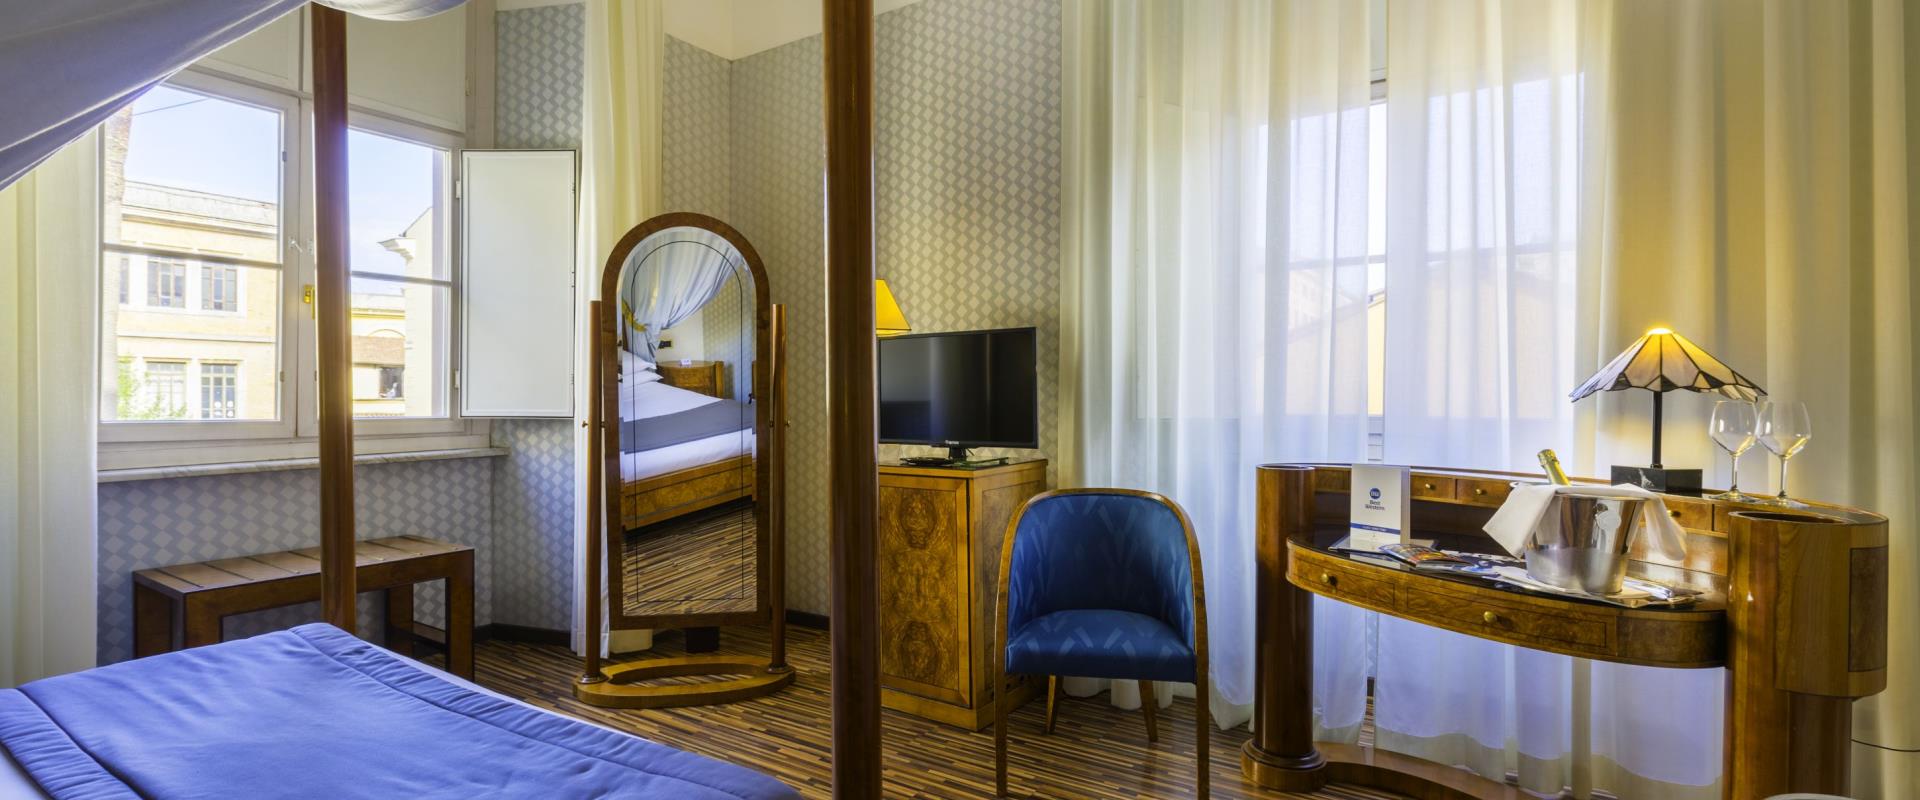 COMFORT Room Best Western Hotel Artdeco Rome Hote 4 star in Rome